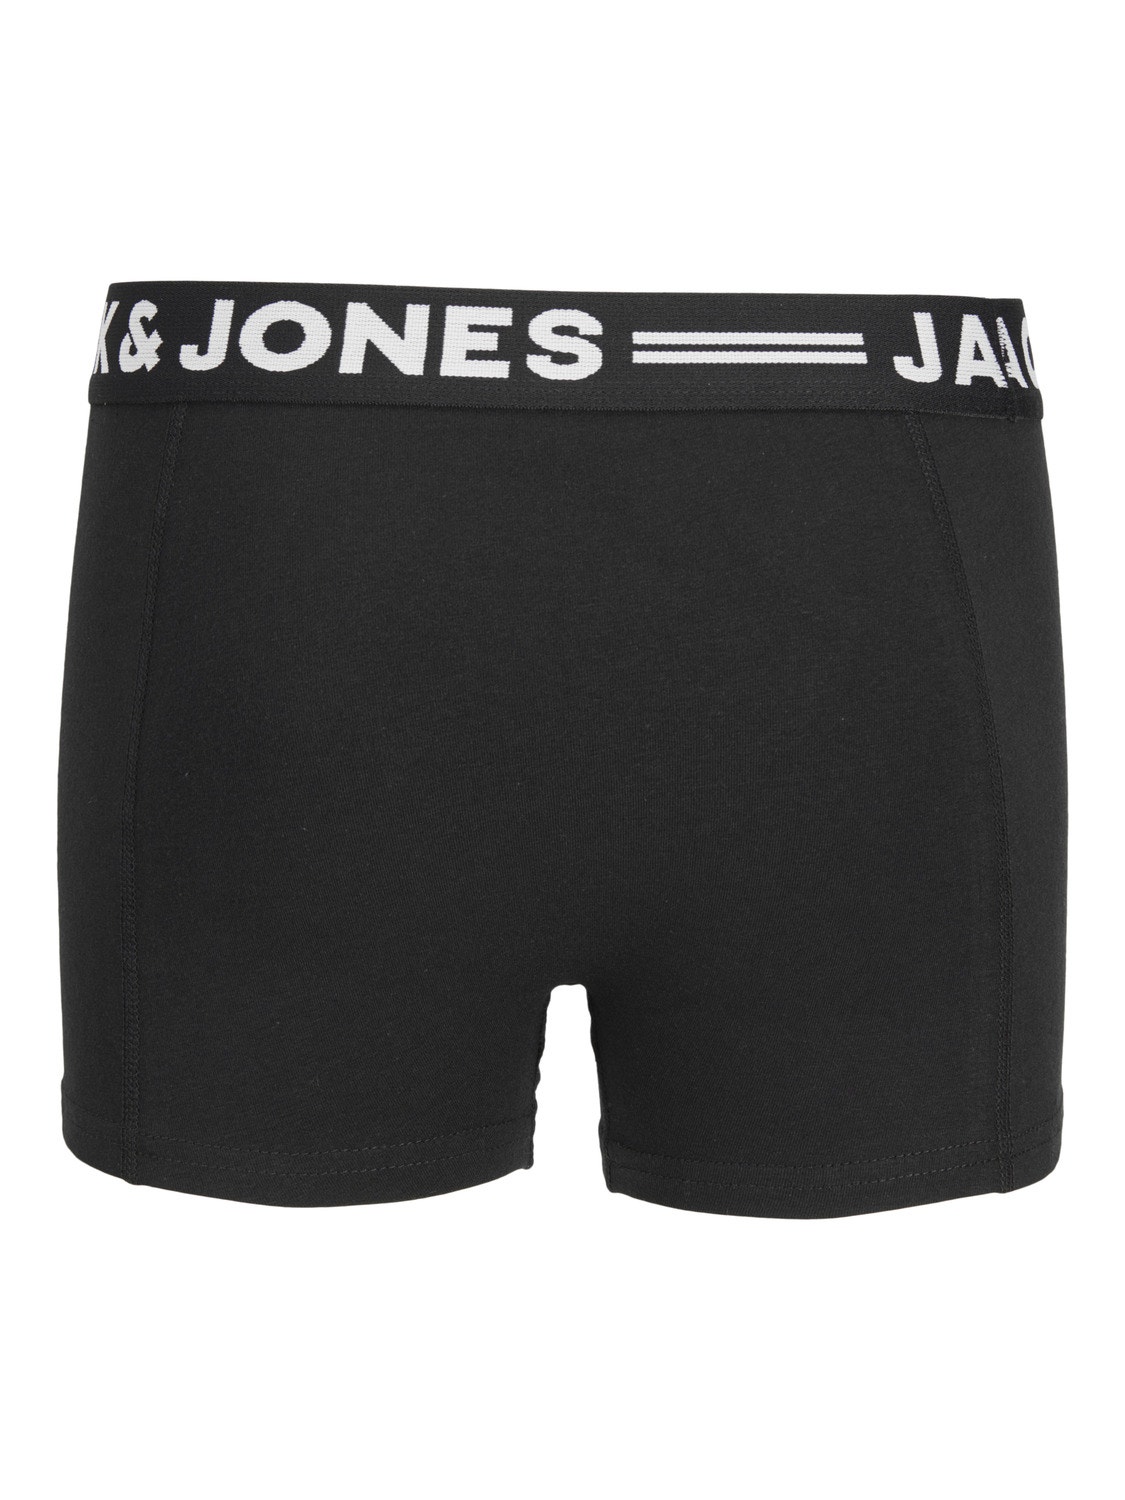 Jack & Jones 3 Trunks Junior -Black - 12149293